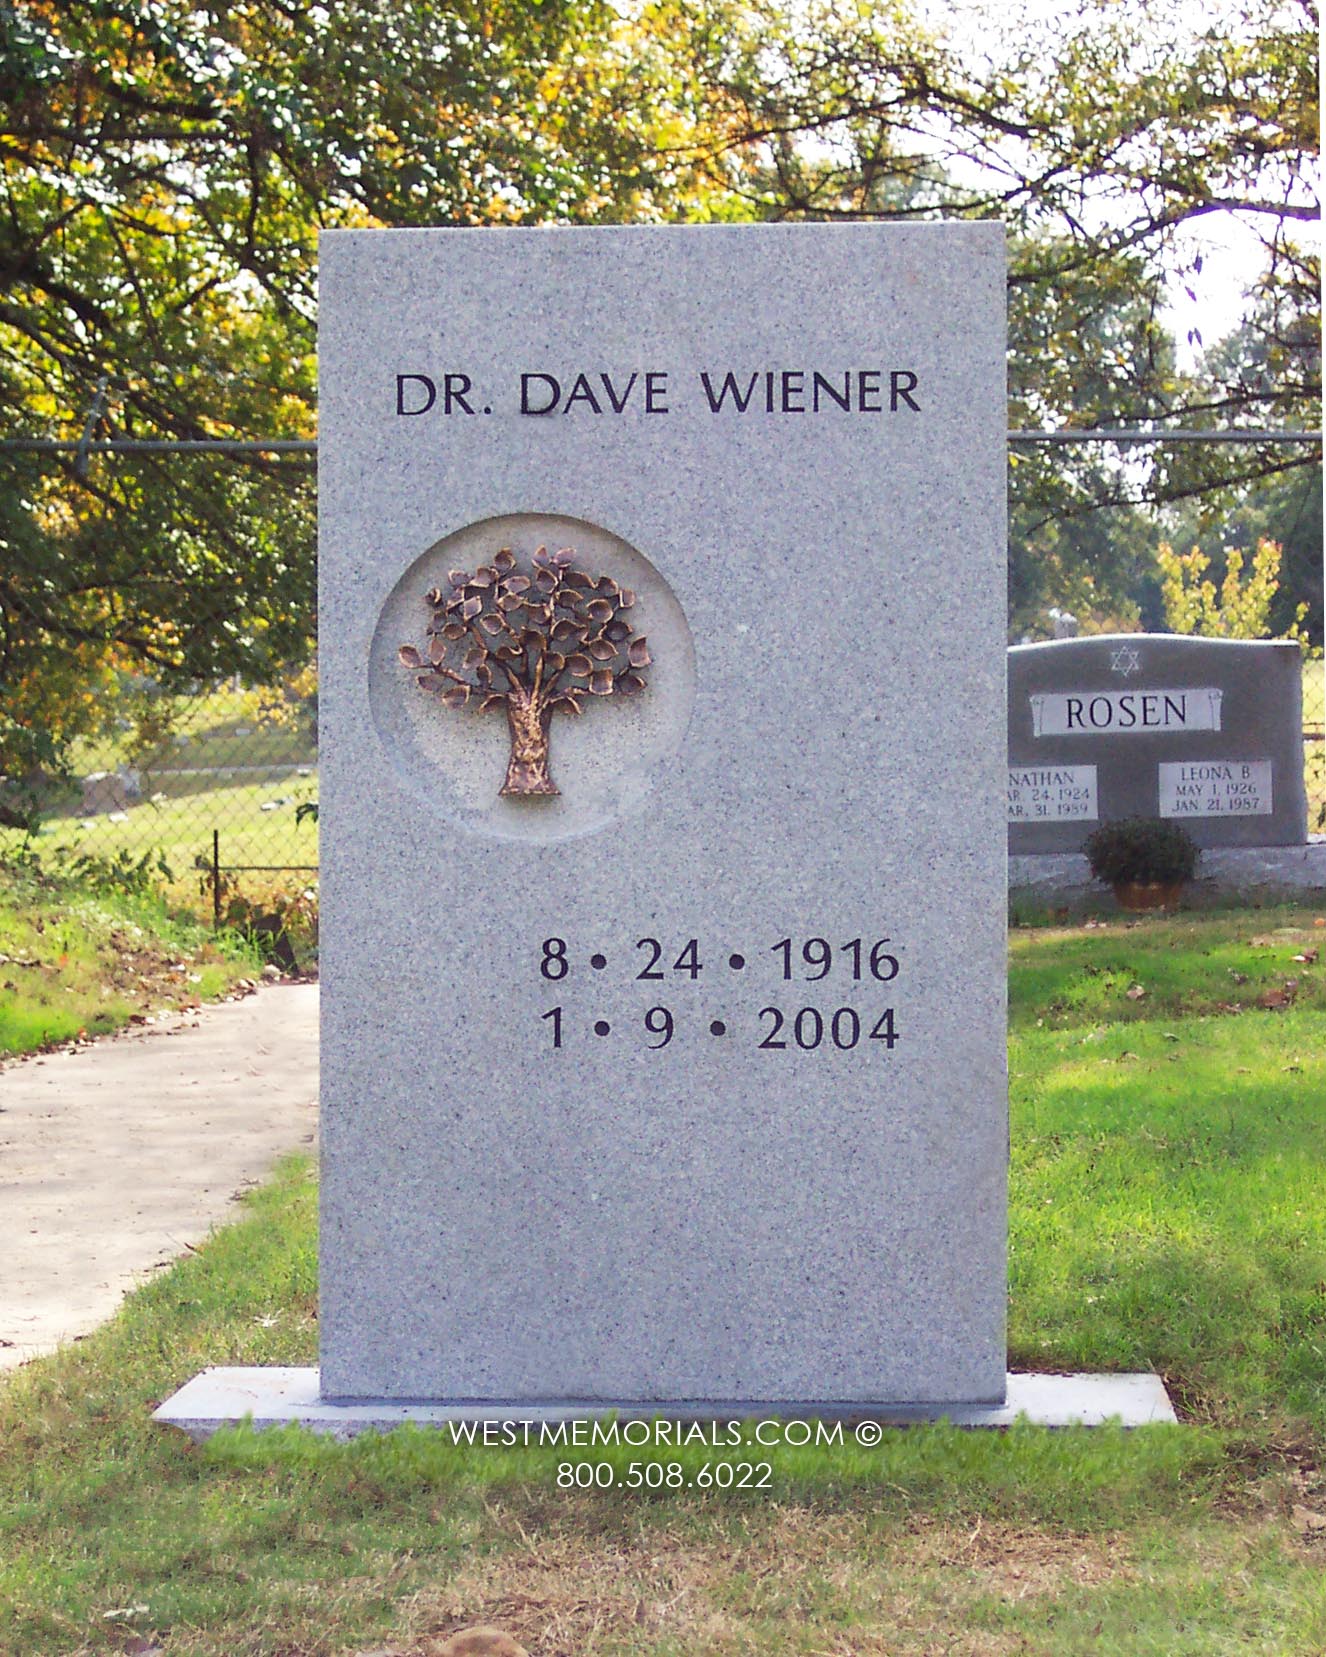 wiener bronze tree gravestone